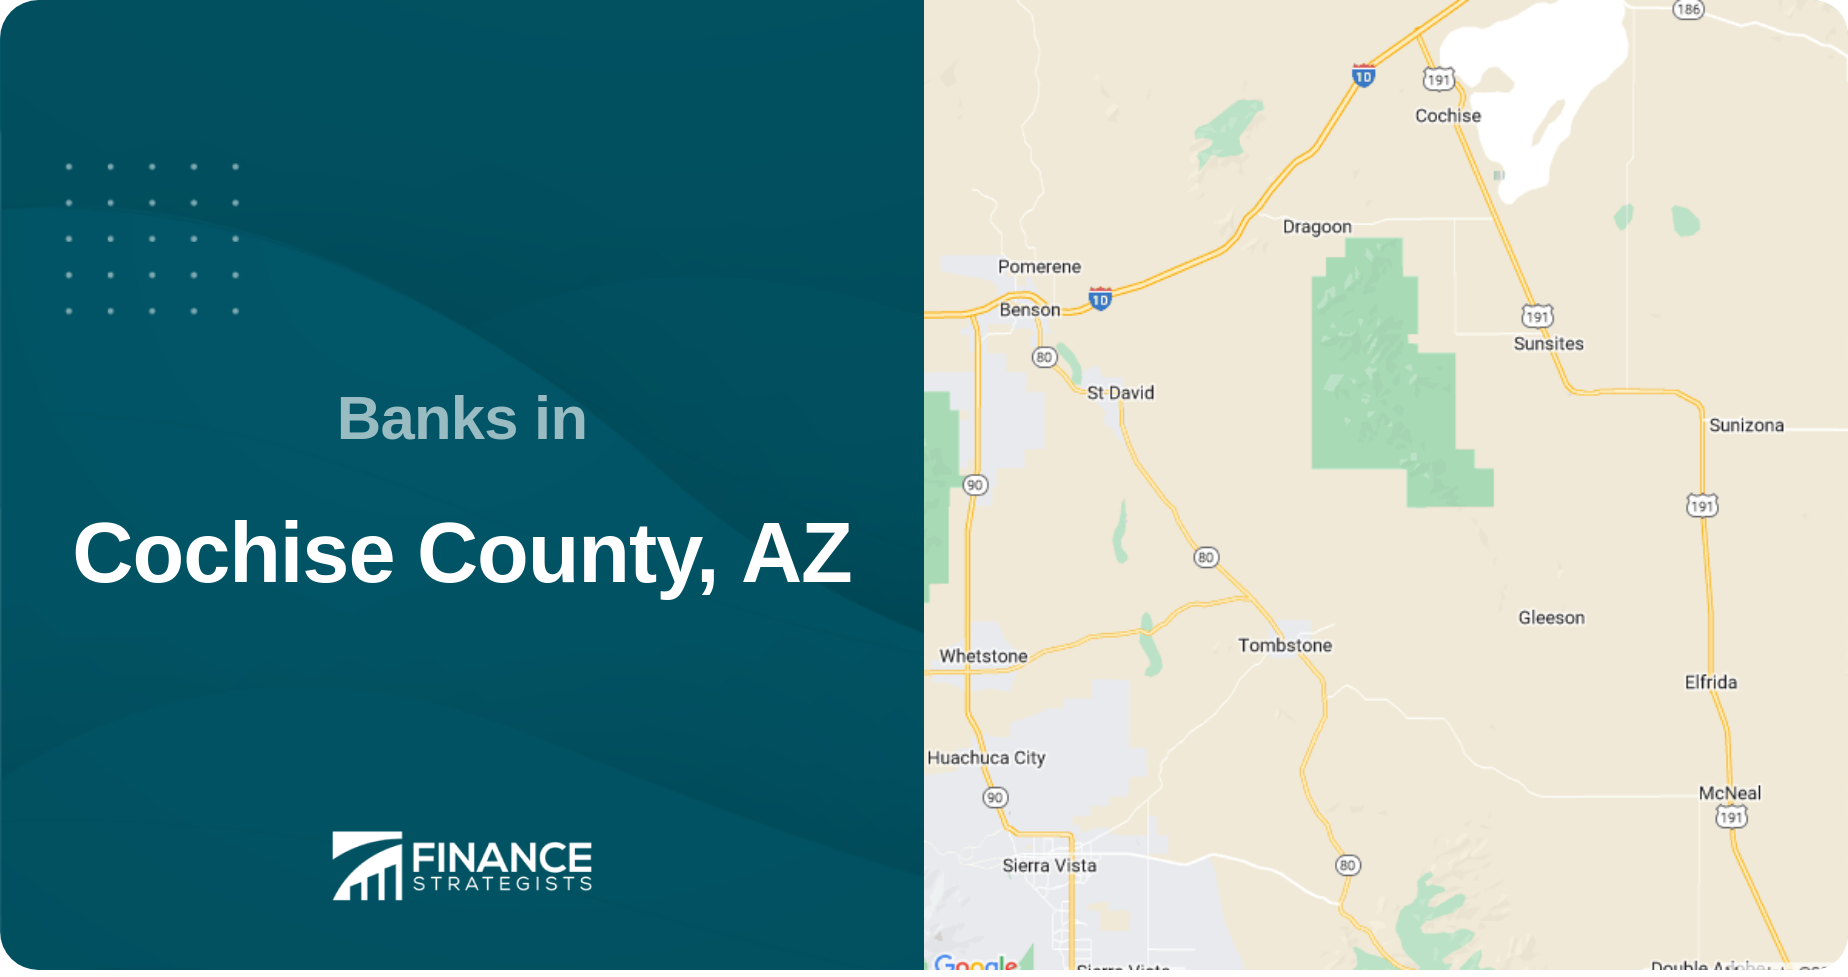 Banks in Cochise County, AZ